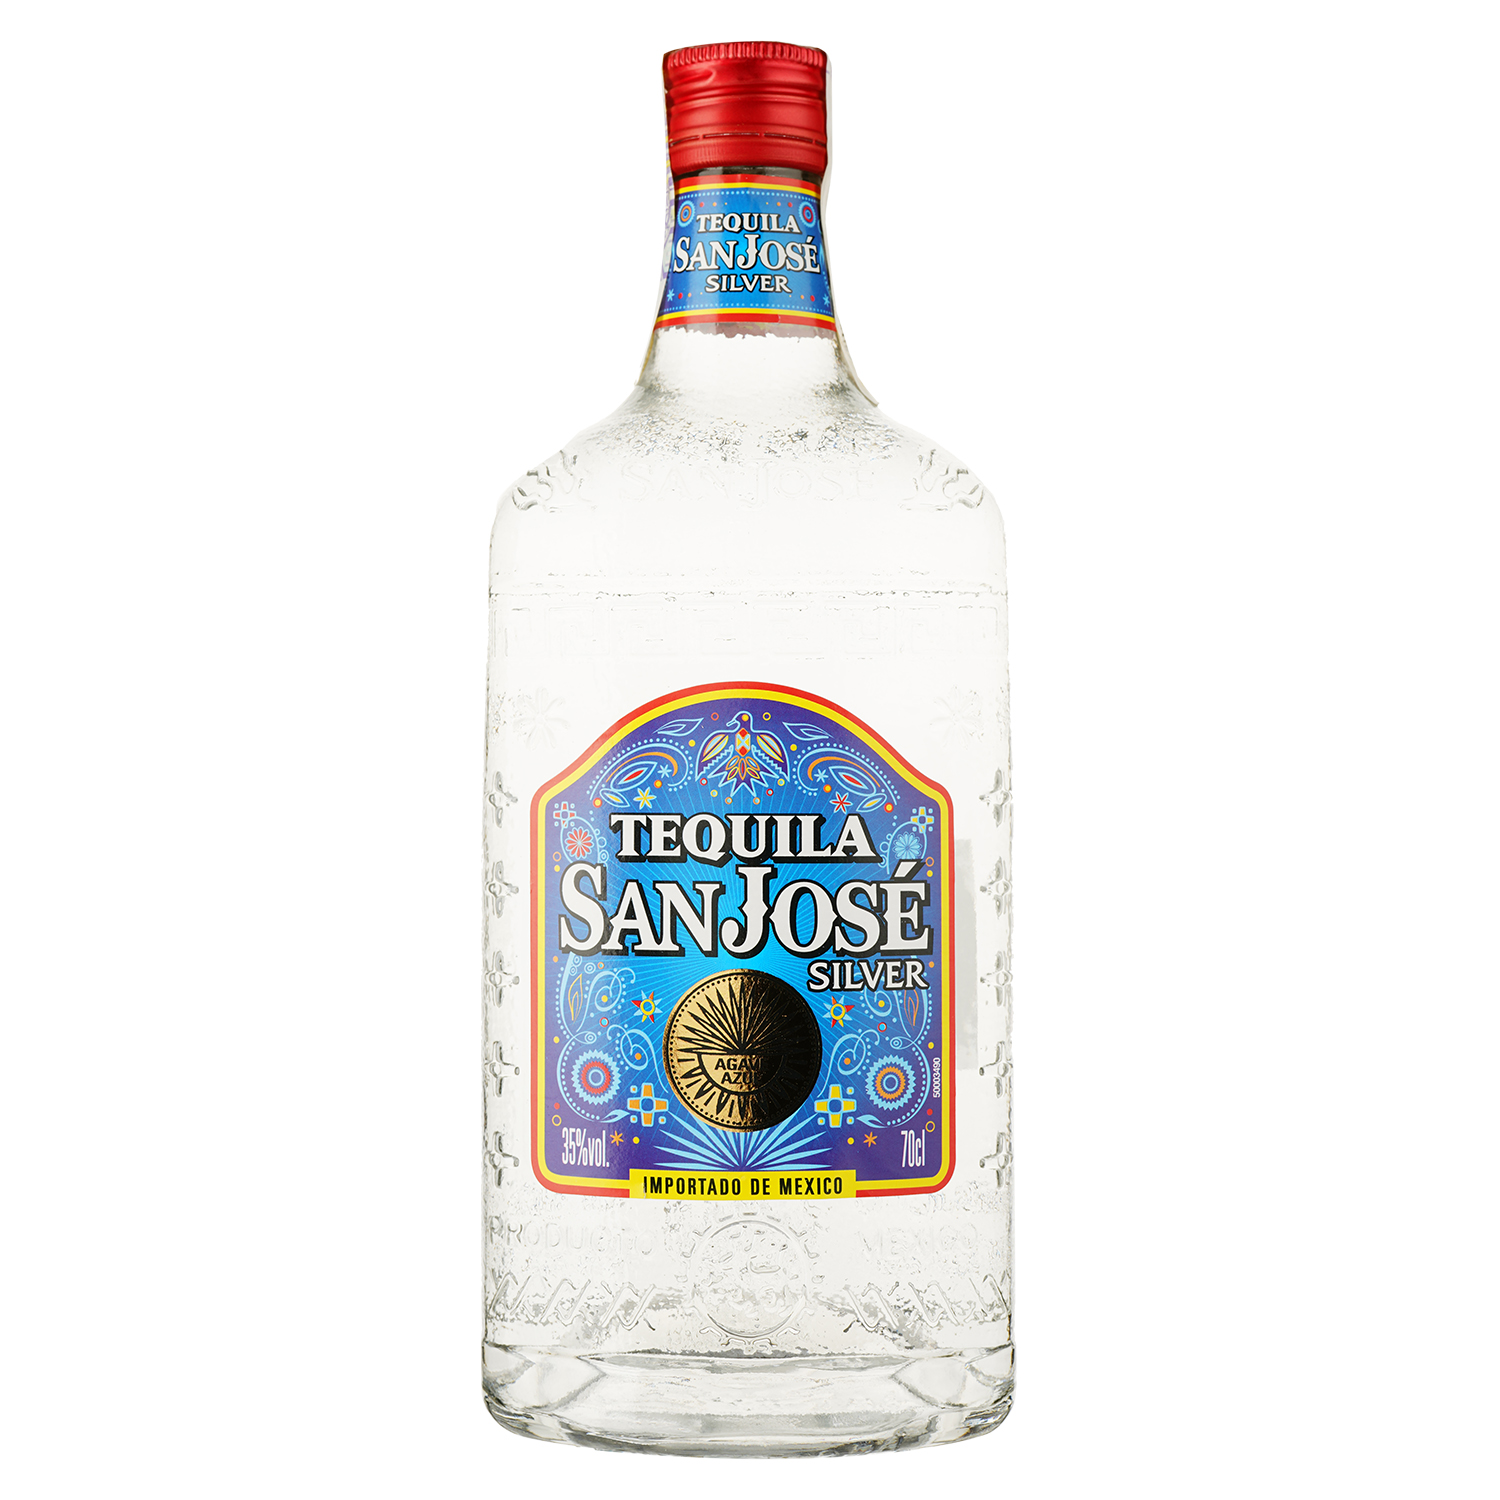 Текила Tequila San Jose Silver, 35%, 0.7 л - фото 1